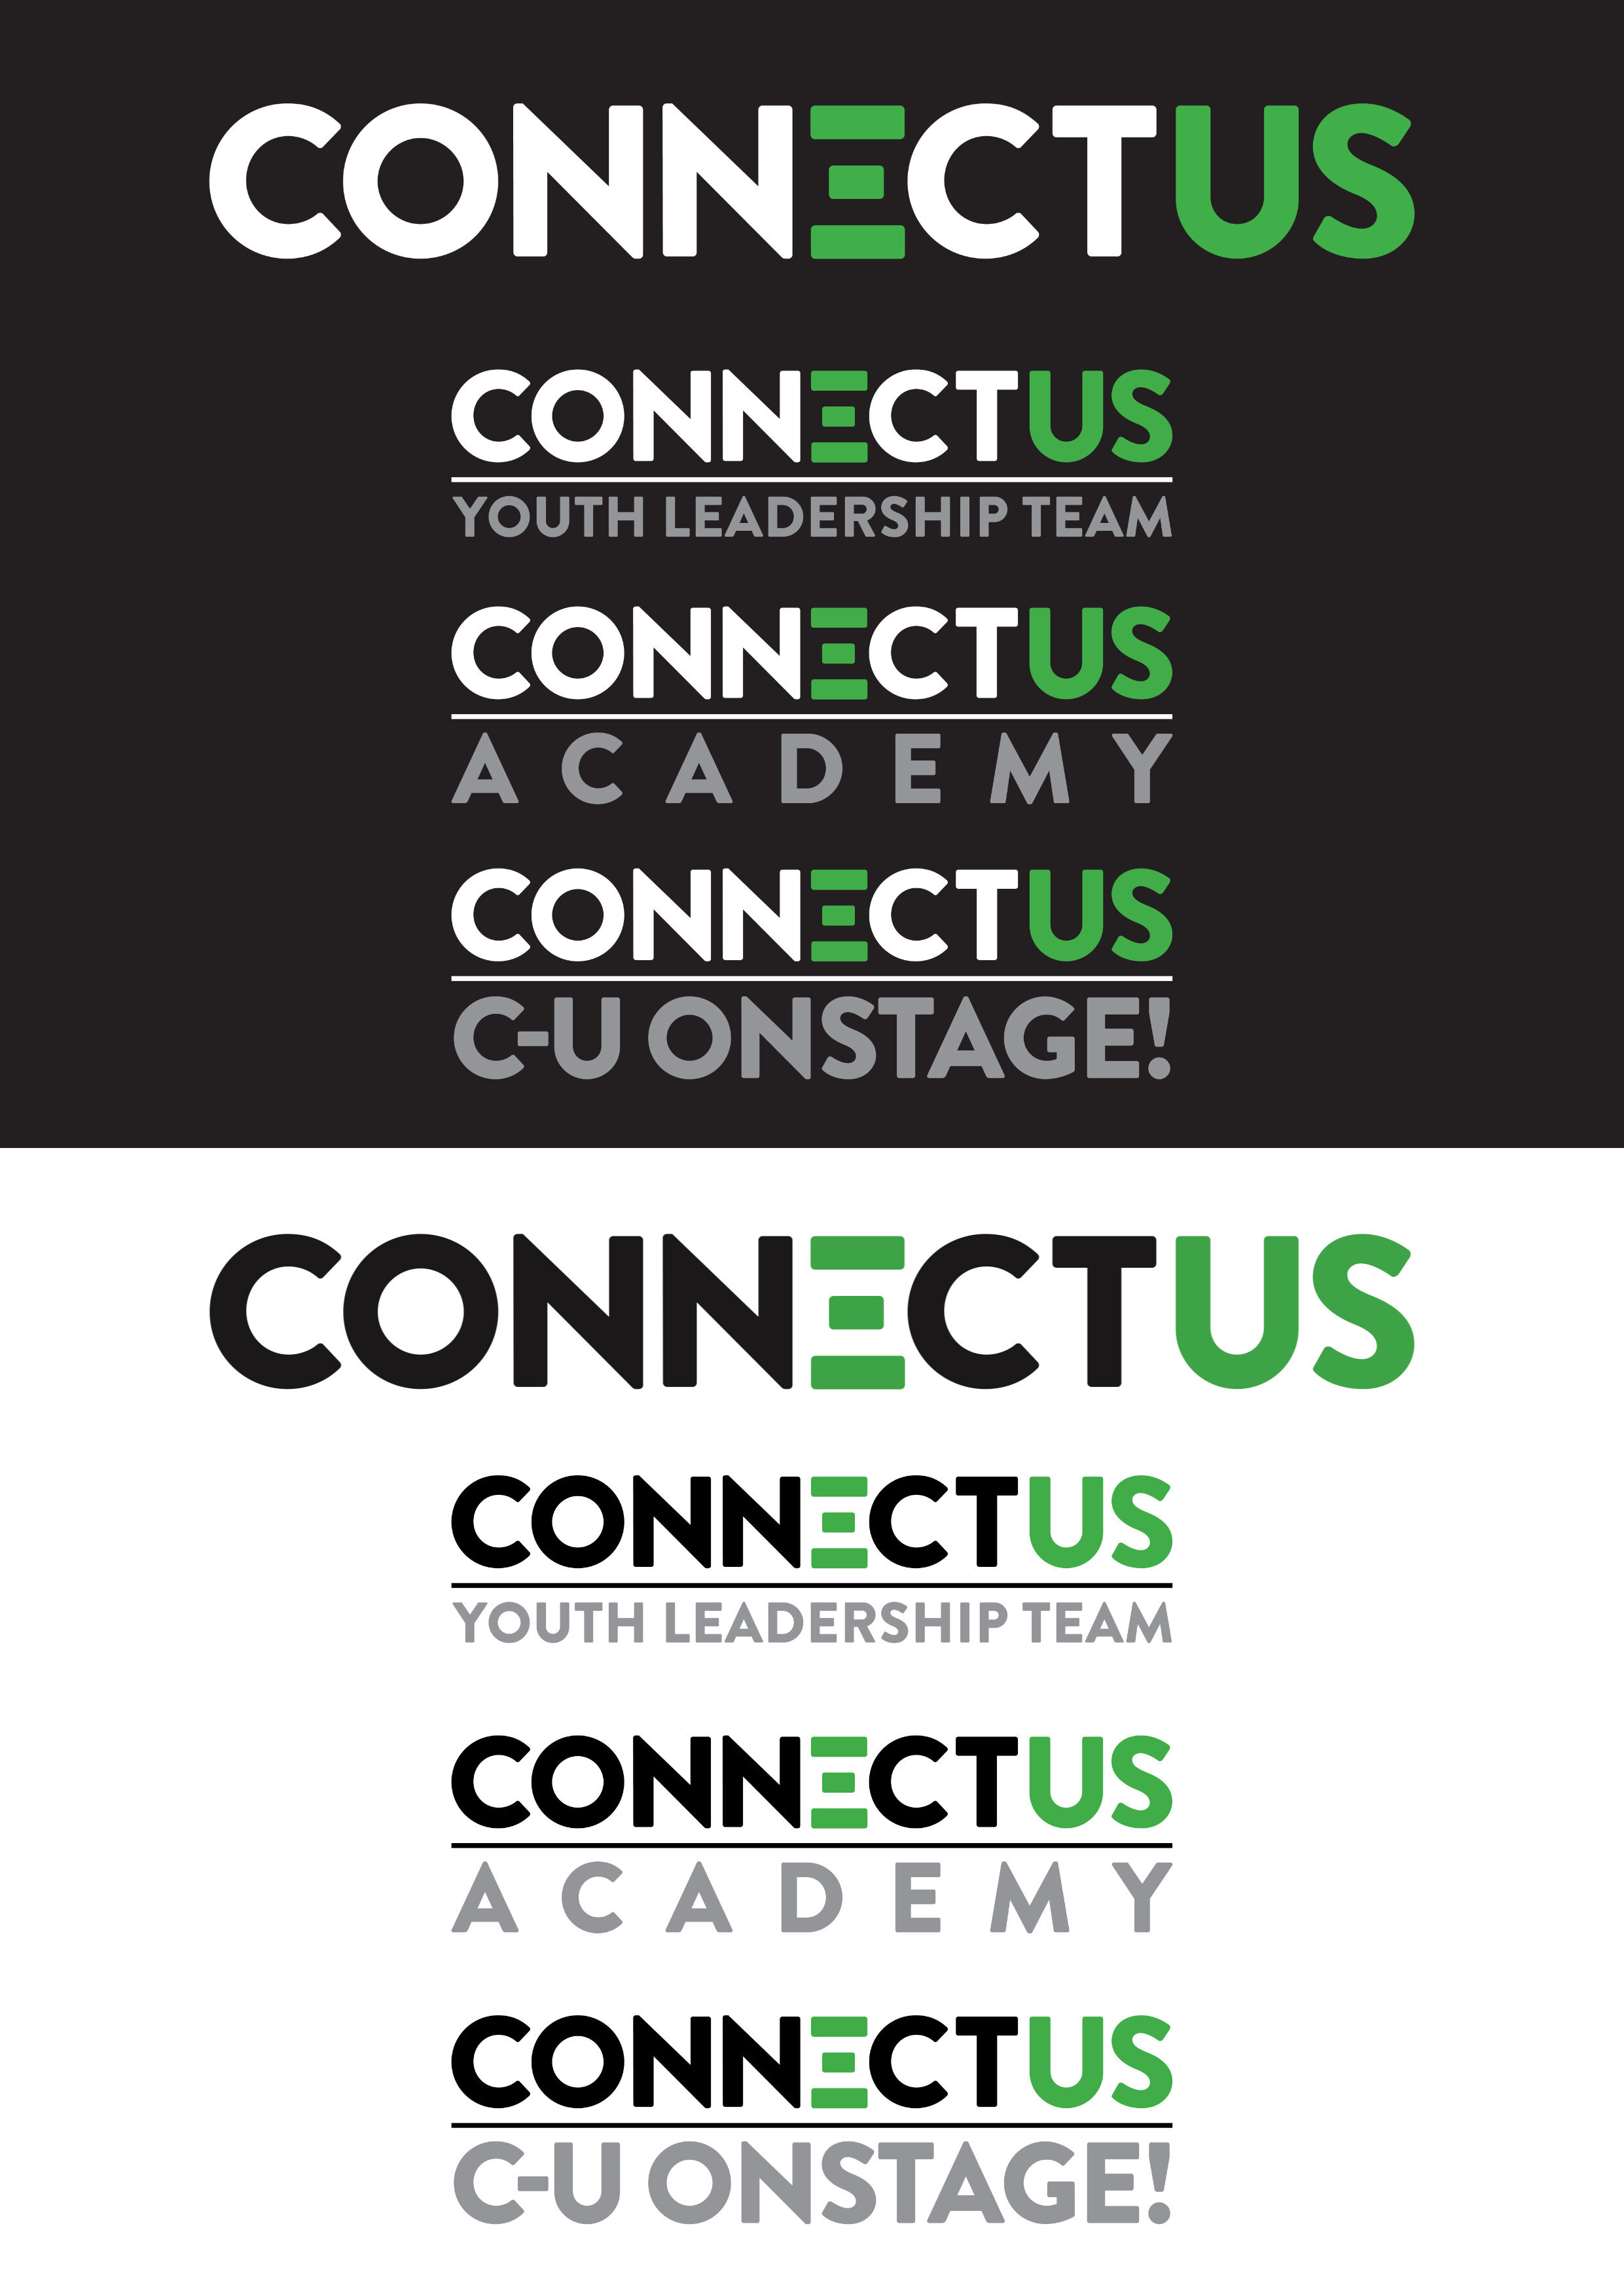 Connect-Us Logos.jpg